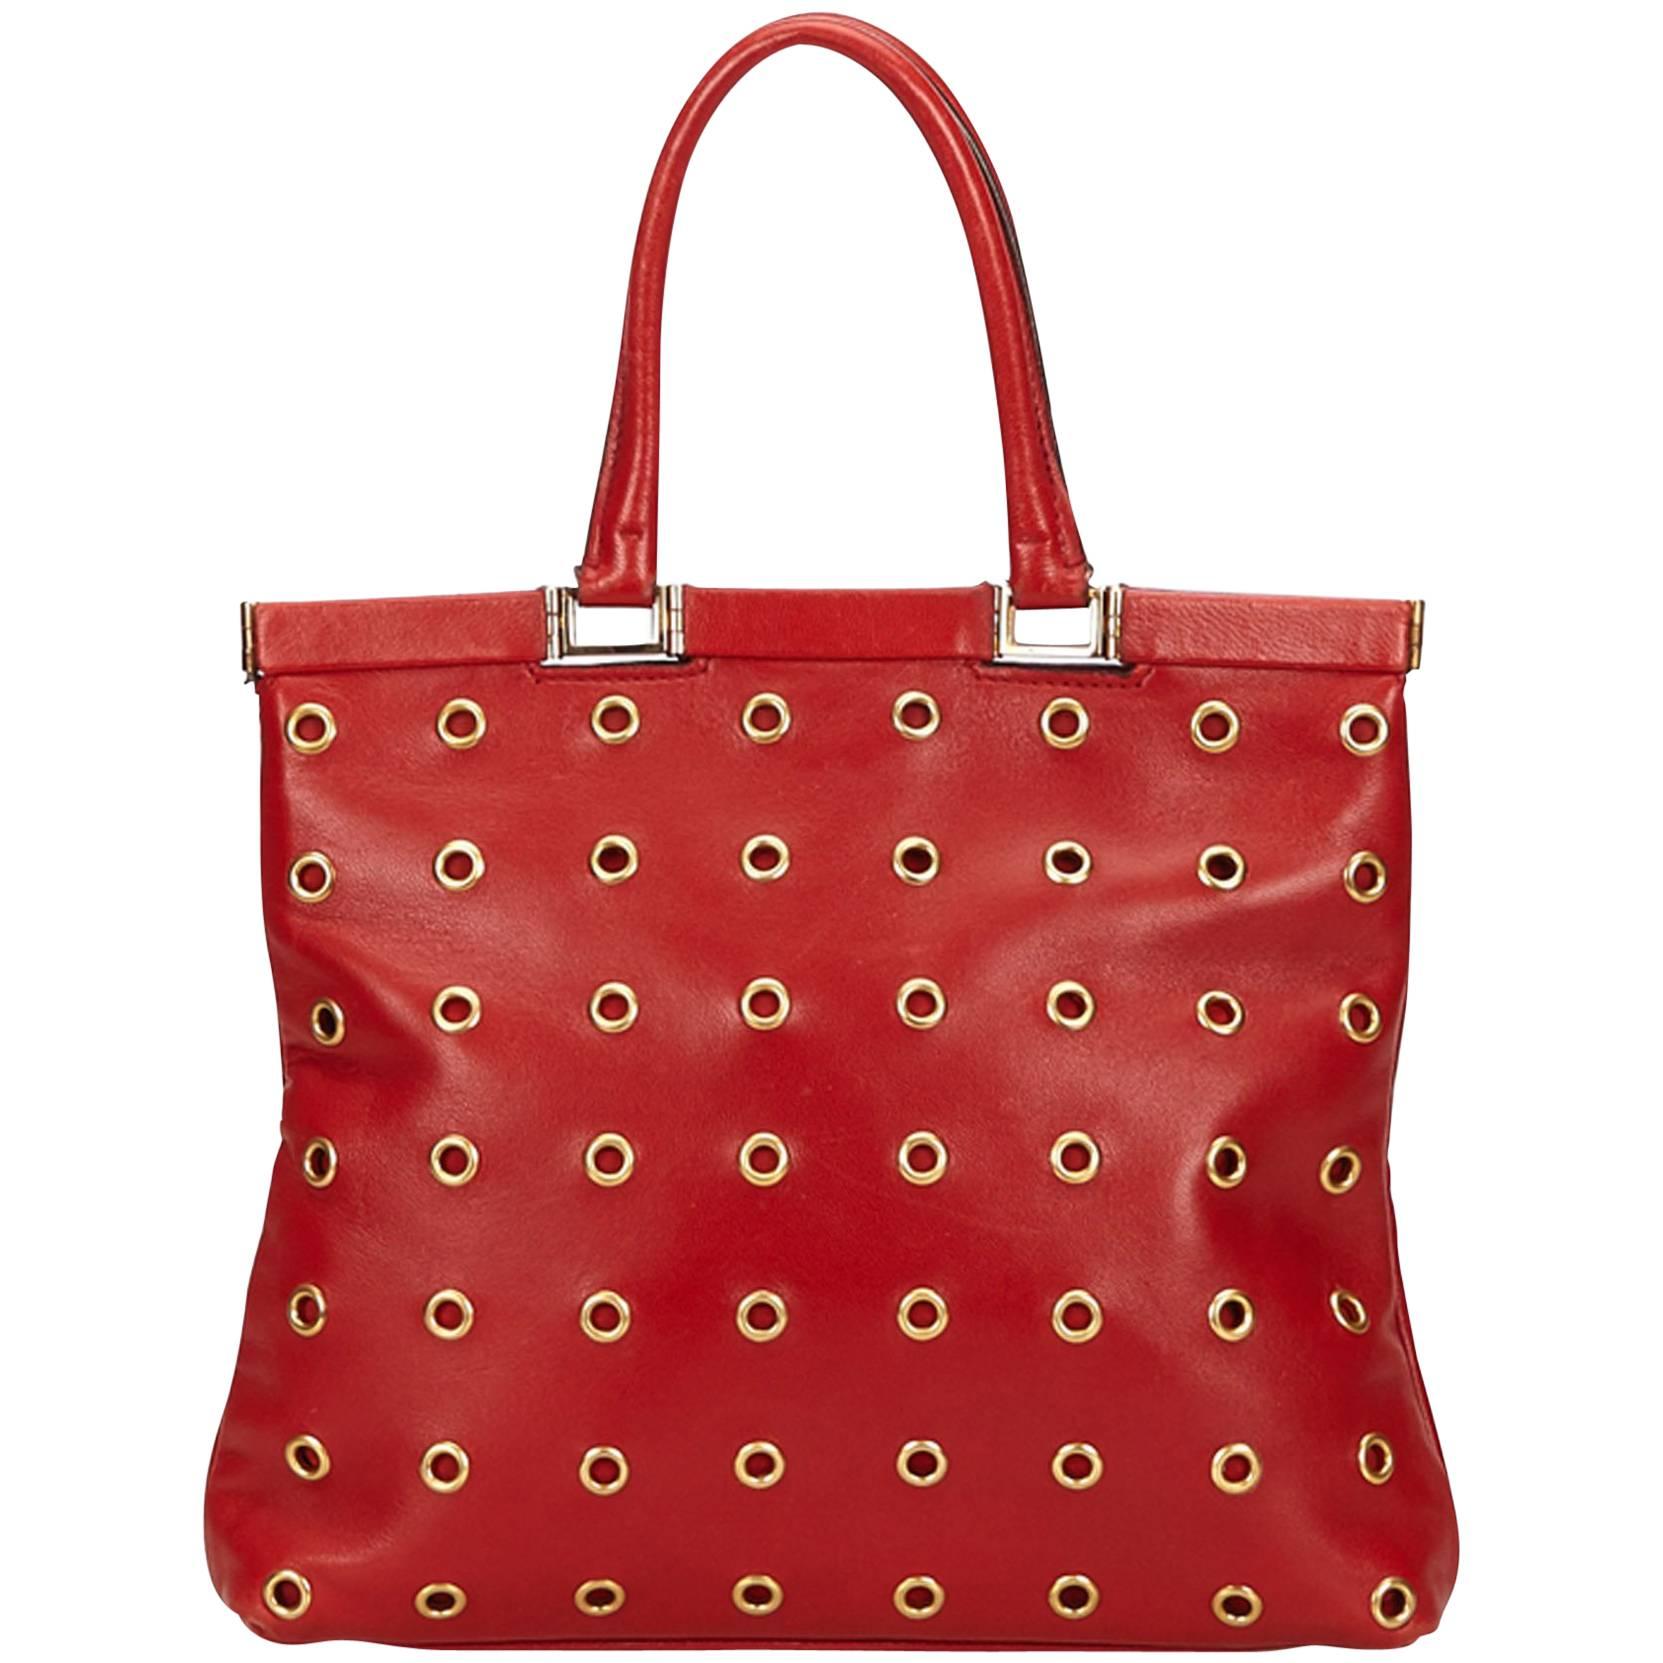 Prada Red Calf Leather 18 Carat Gold-Toned Eyelet Handbag